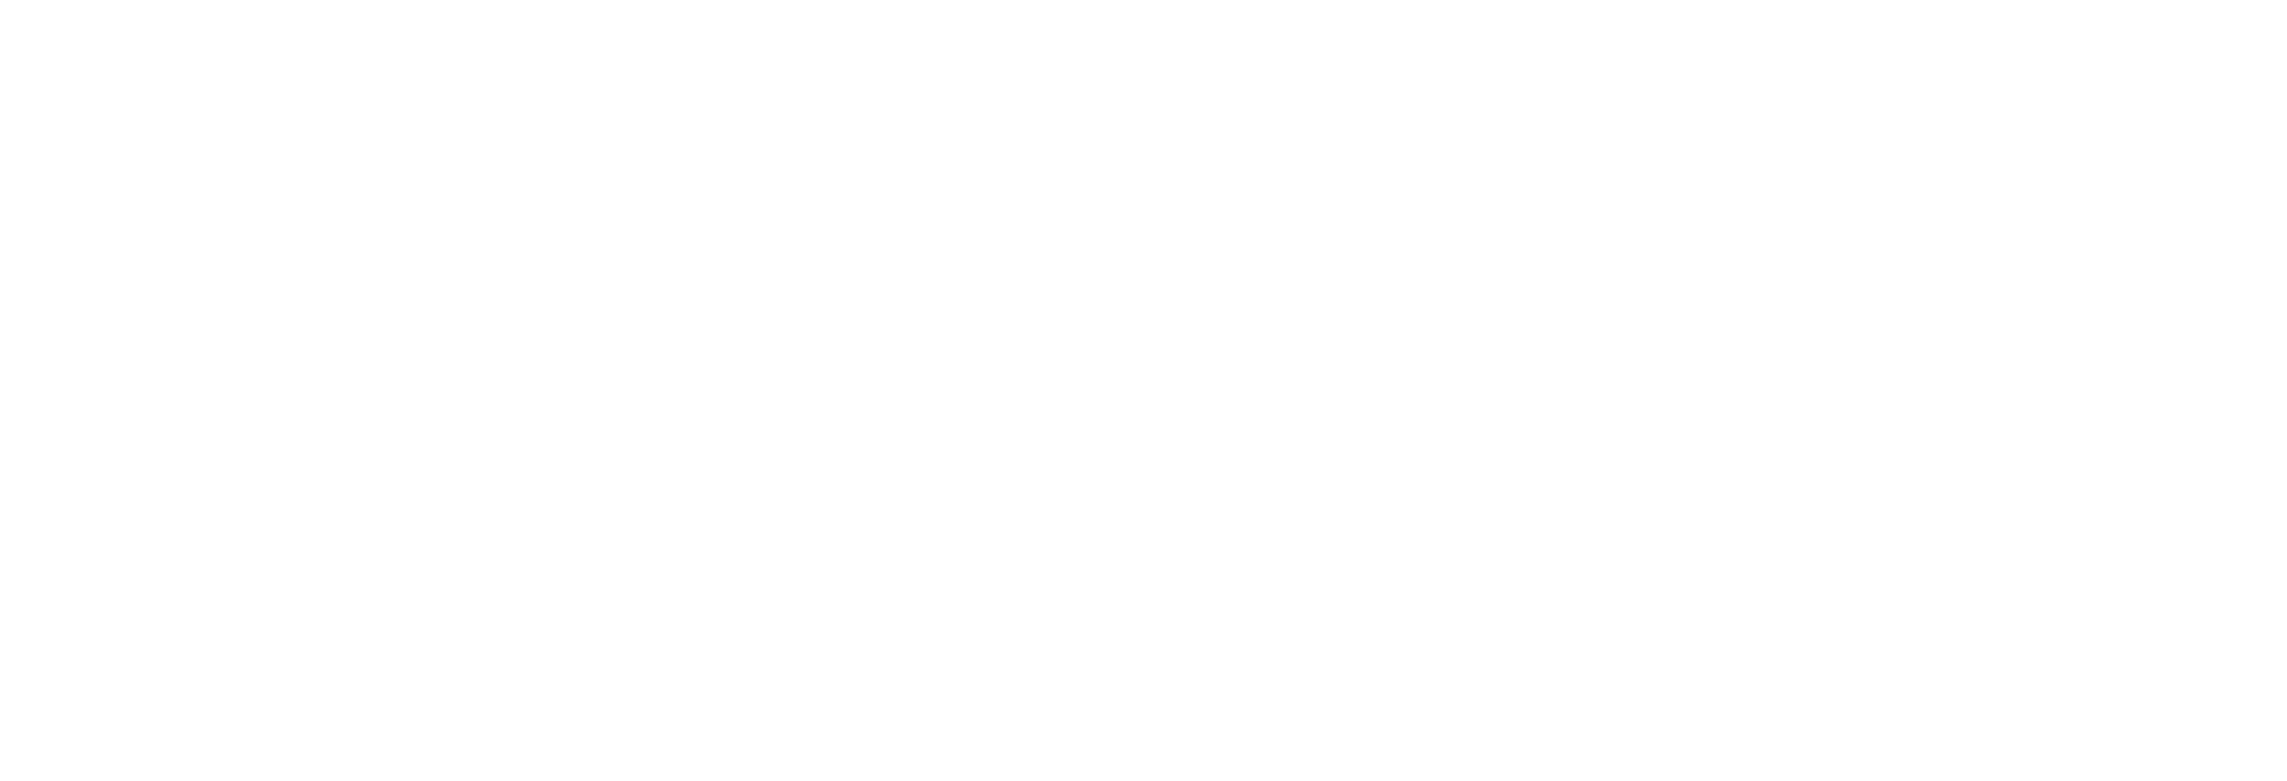 Carbon38-logo.png